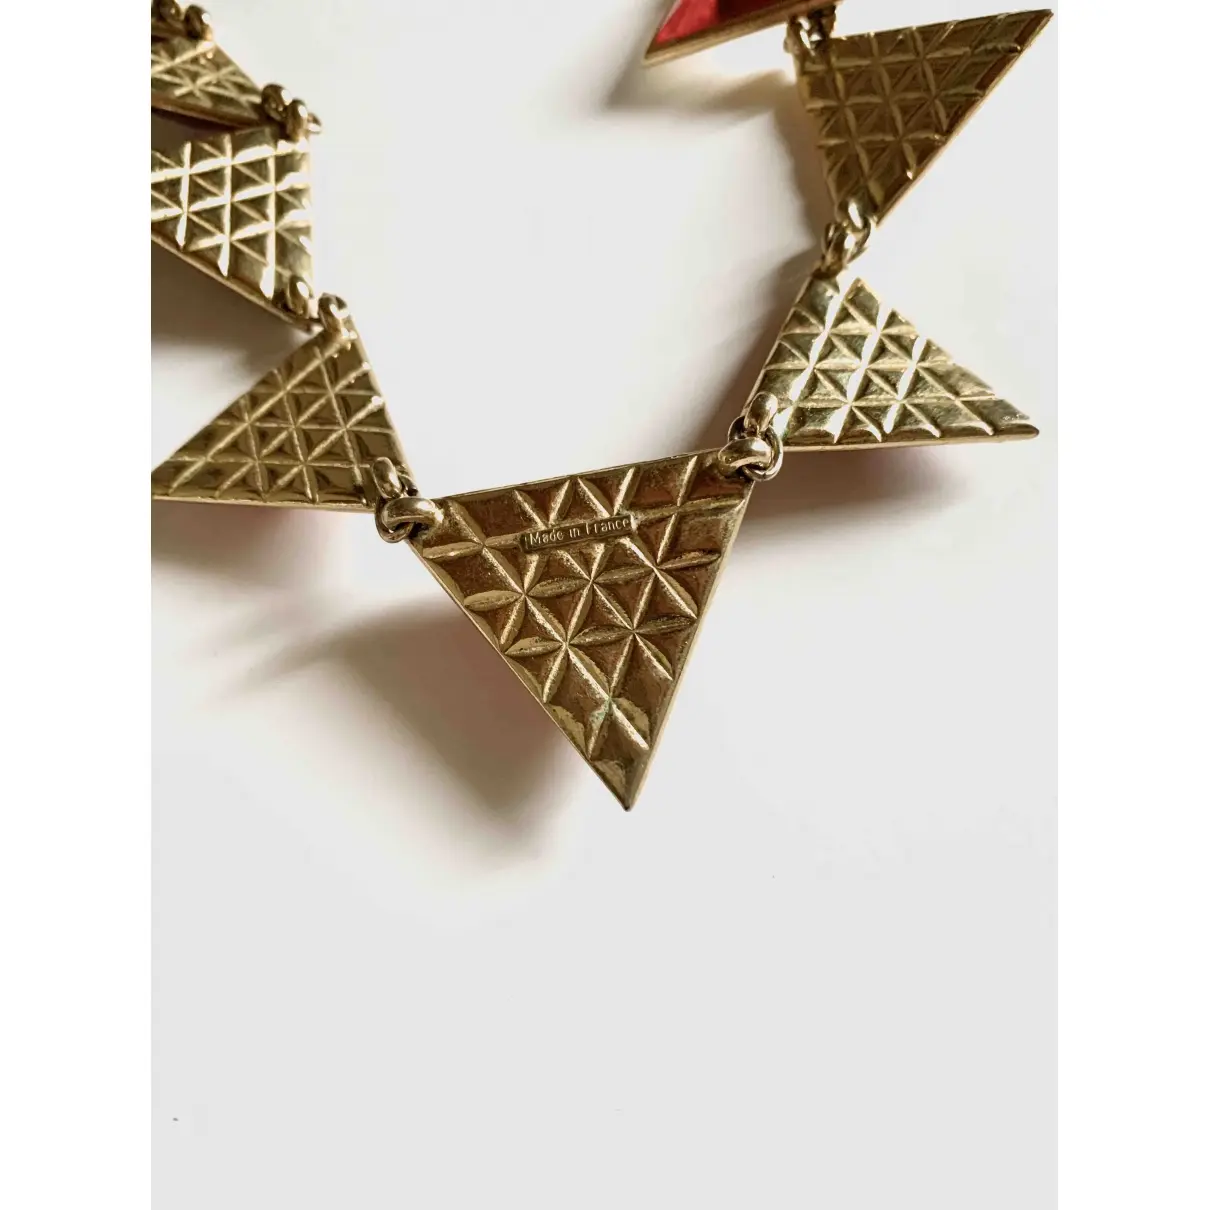 Yves Saint Laurent Jewellery set for sale - Vintage